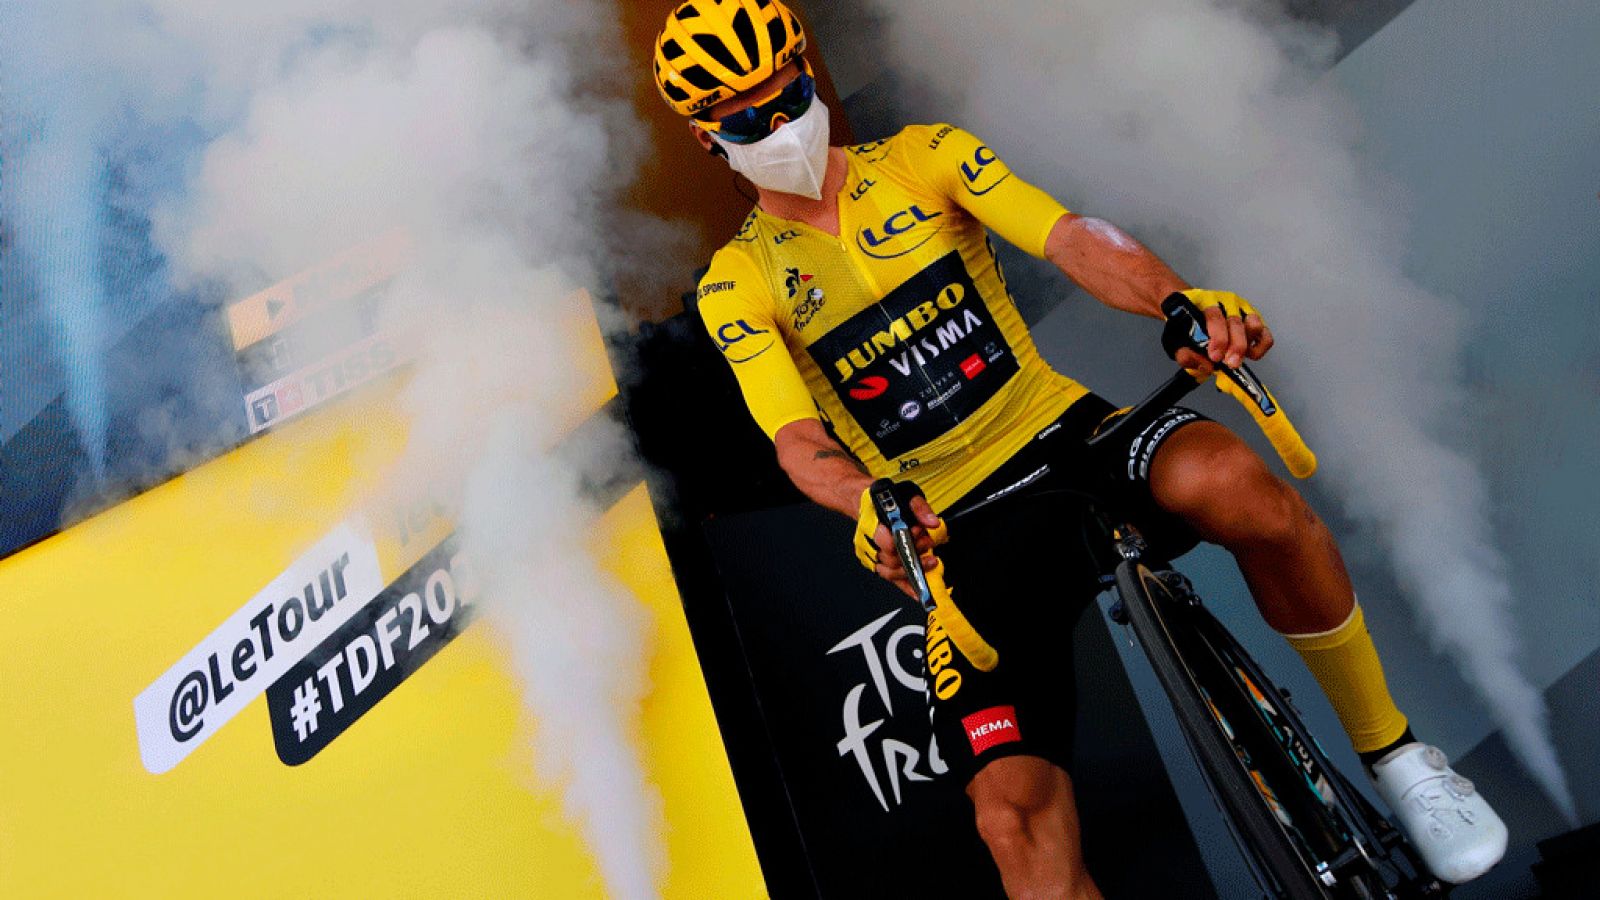 Imagen de Primoz Roglic, líder del Tour de Francia 2020, en el podio de la carrera.